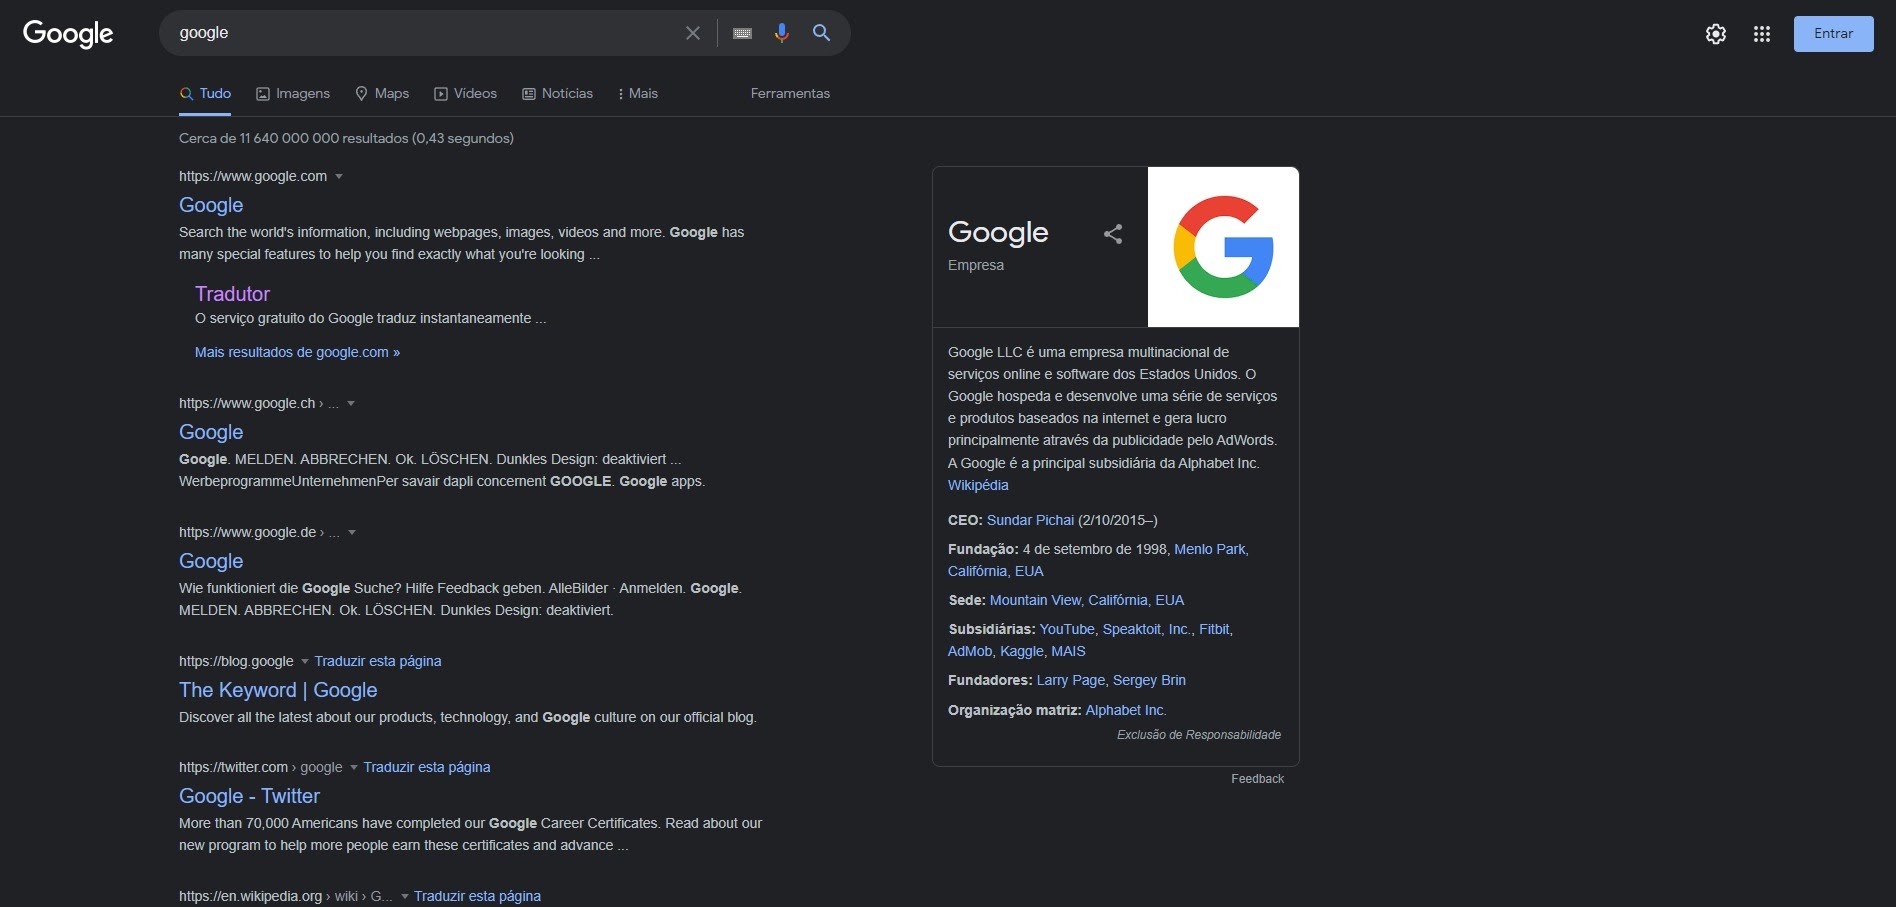 Why Is Google Chrome Black?